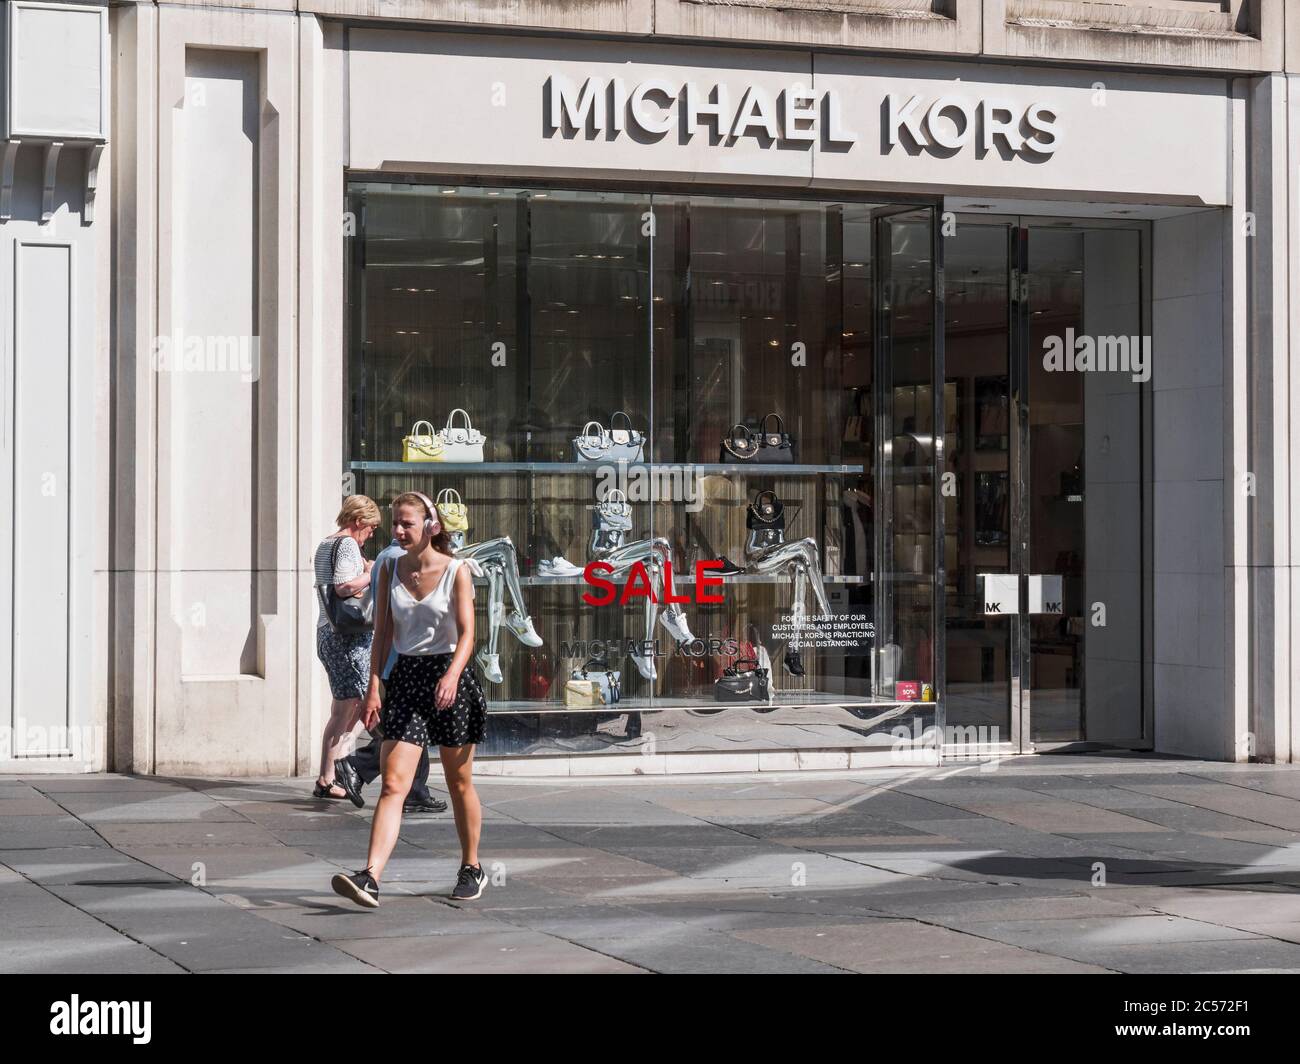 Michael Kors shop front in Newcastle upon Tyne, UK Stock Photo - Alamy